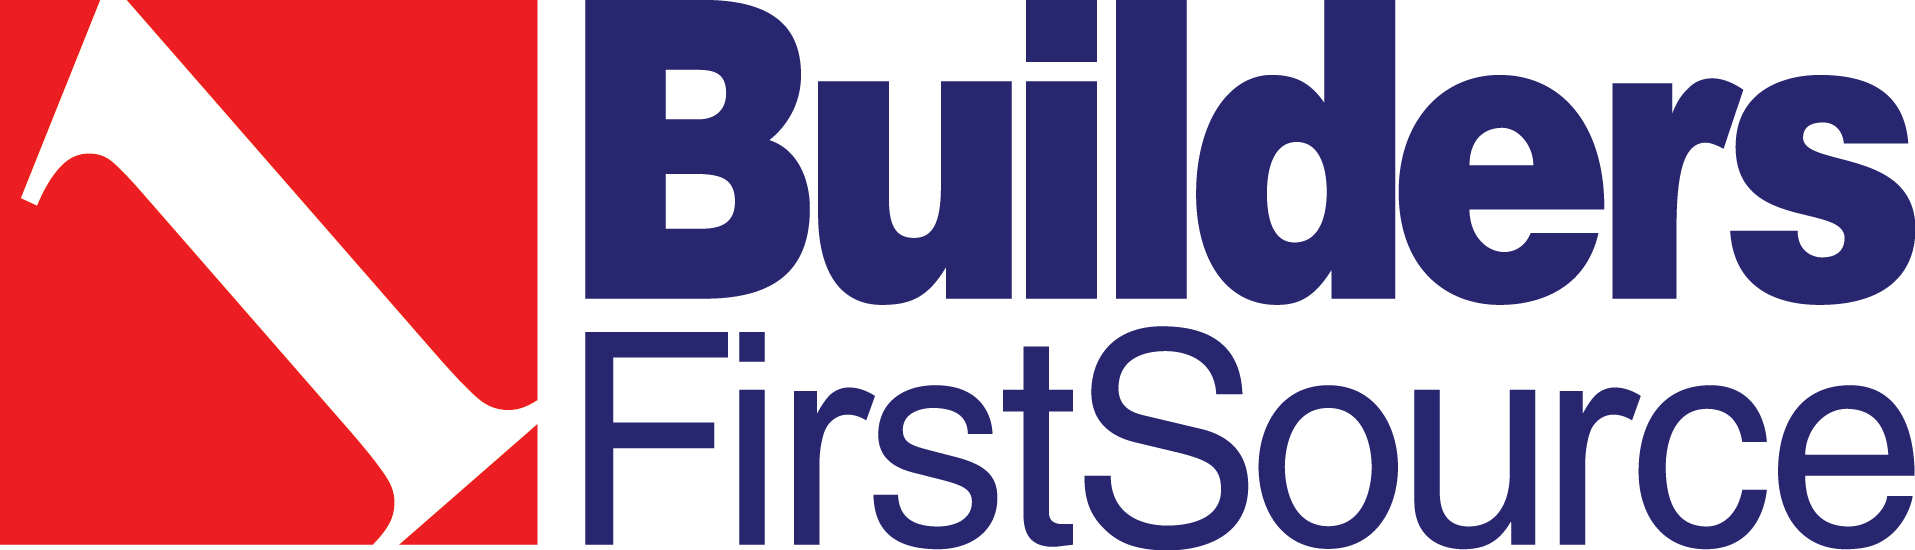 BuildersFirstSource_logo_high def.png